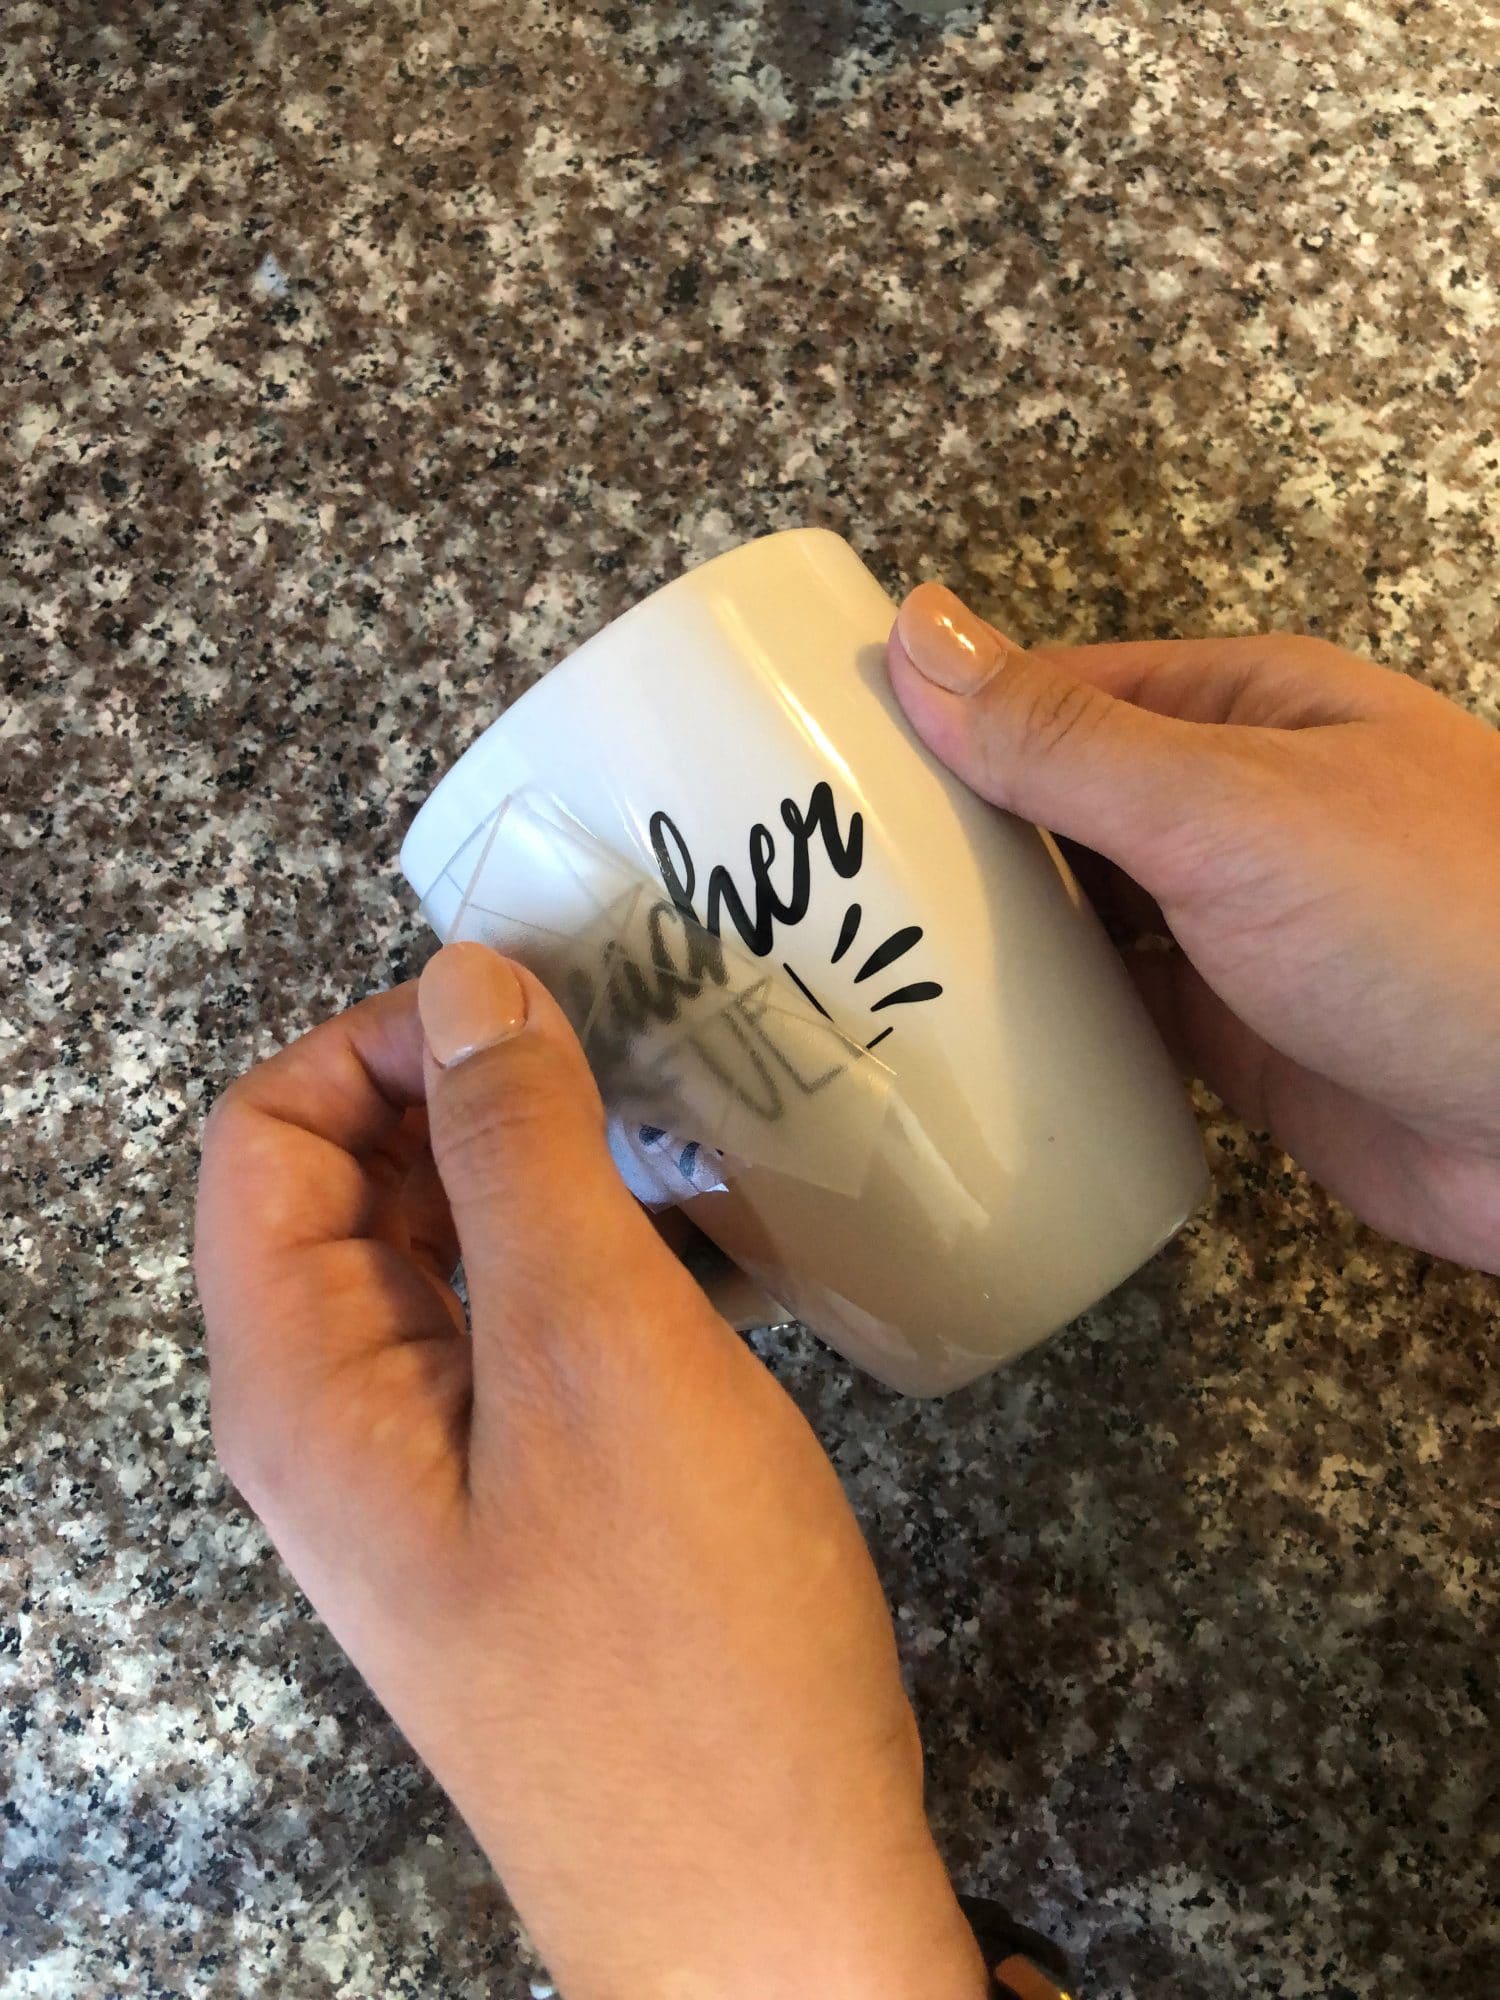 applying design to mug with transfer tape